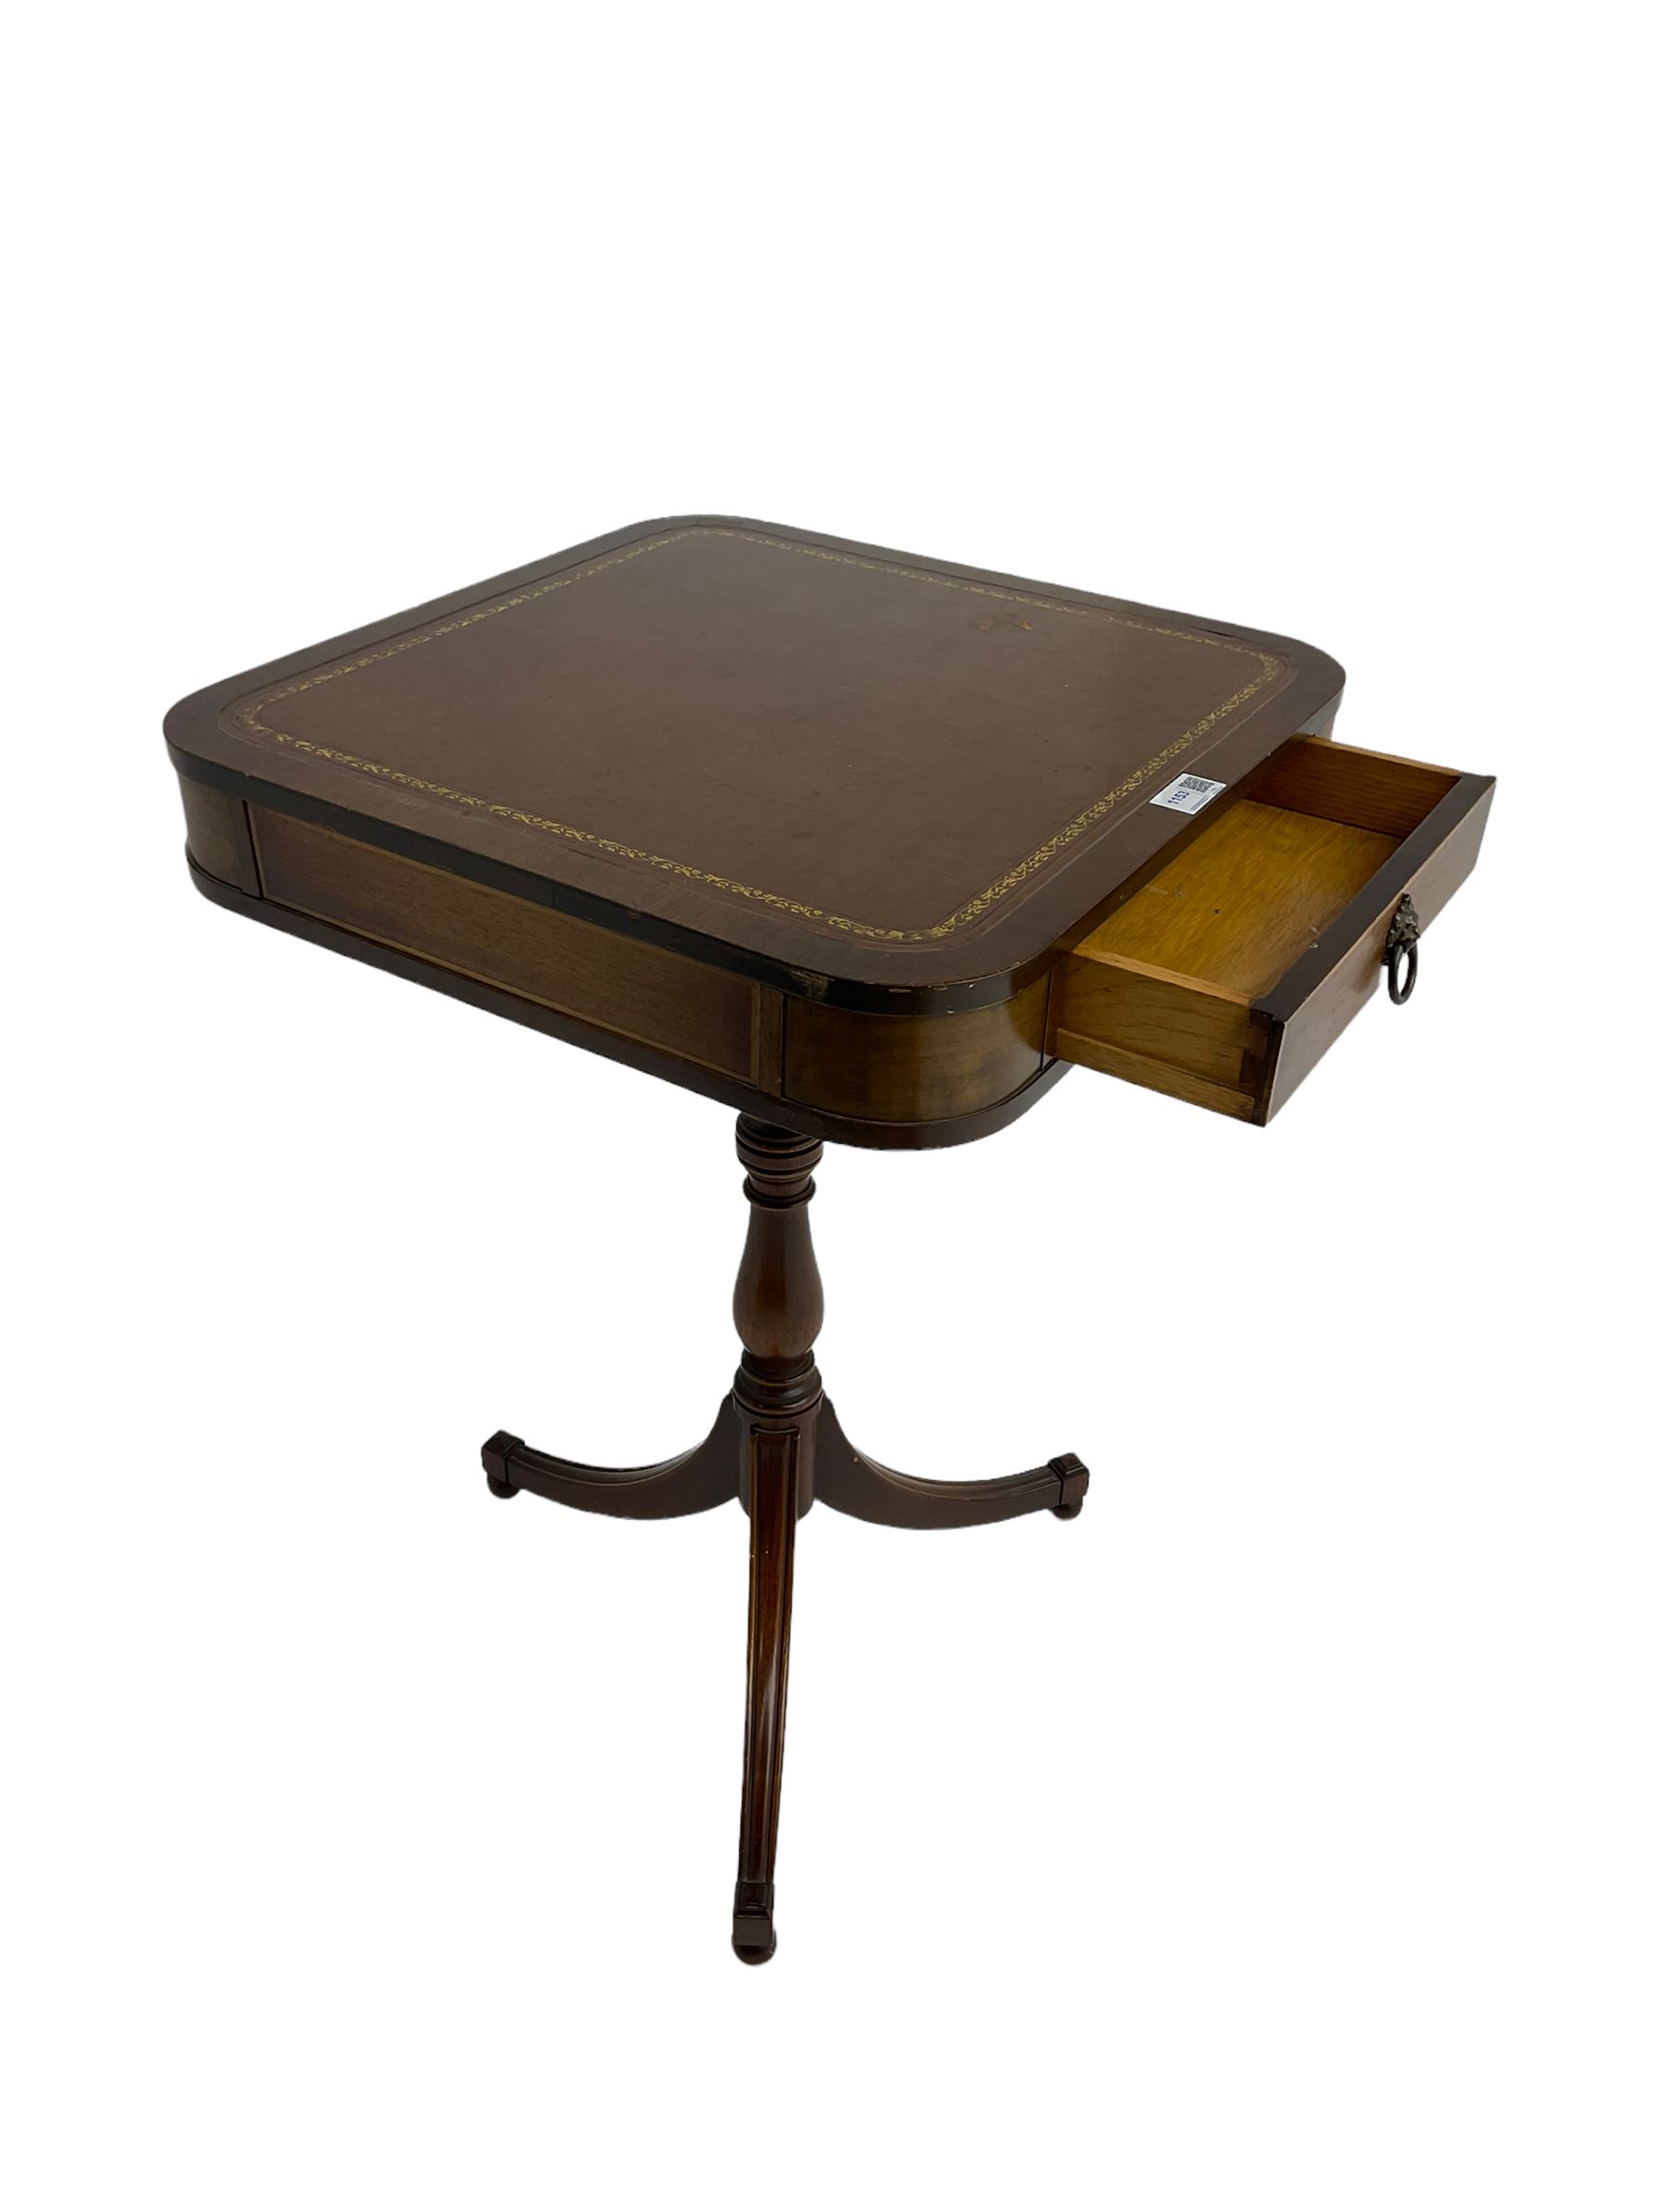 Regency style mahogany pedestal table - Image 7 of 7